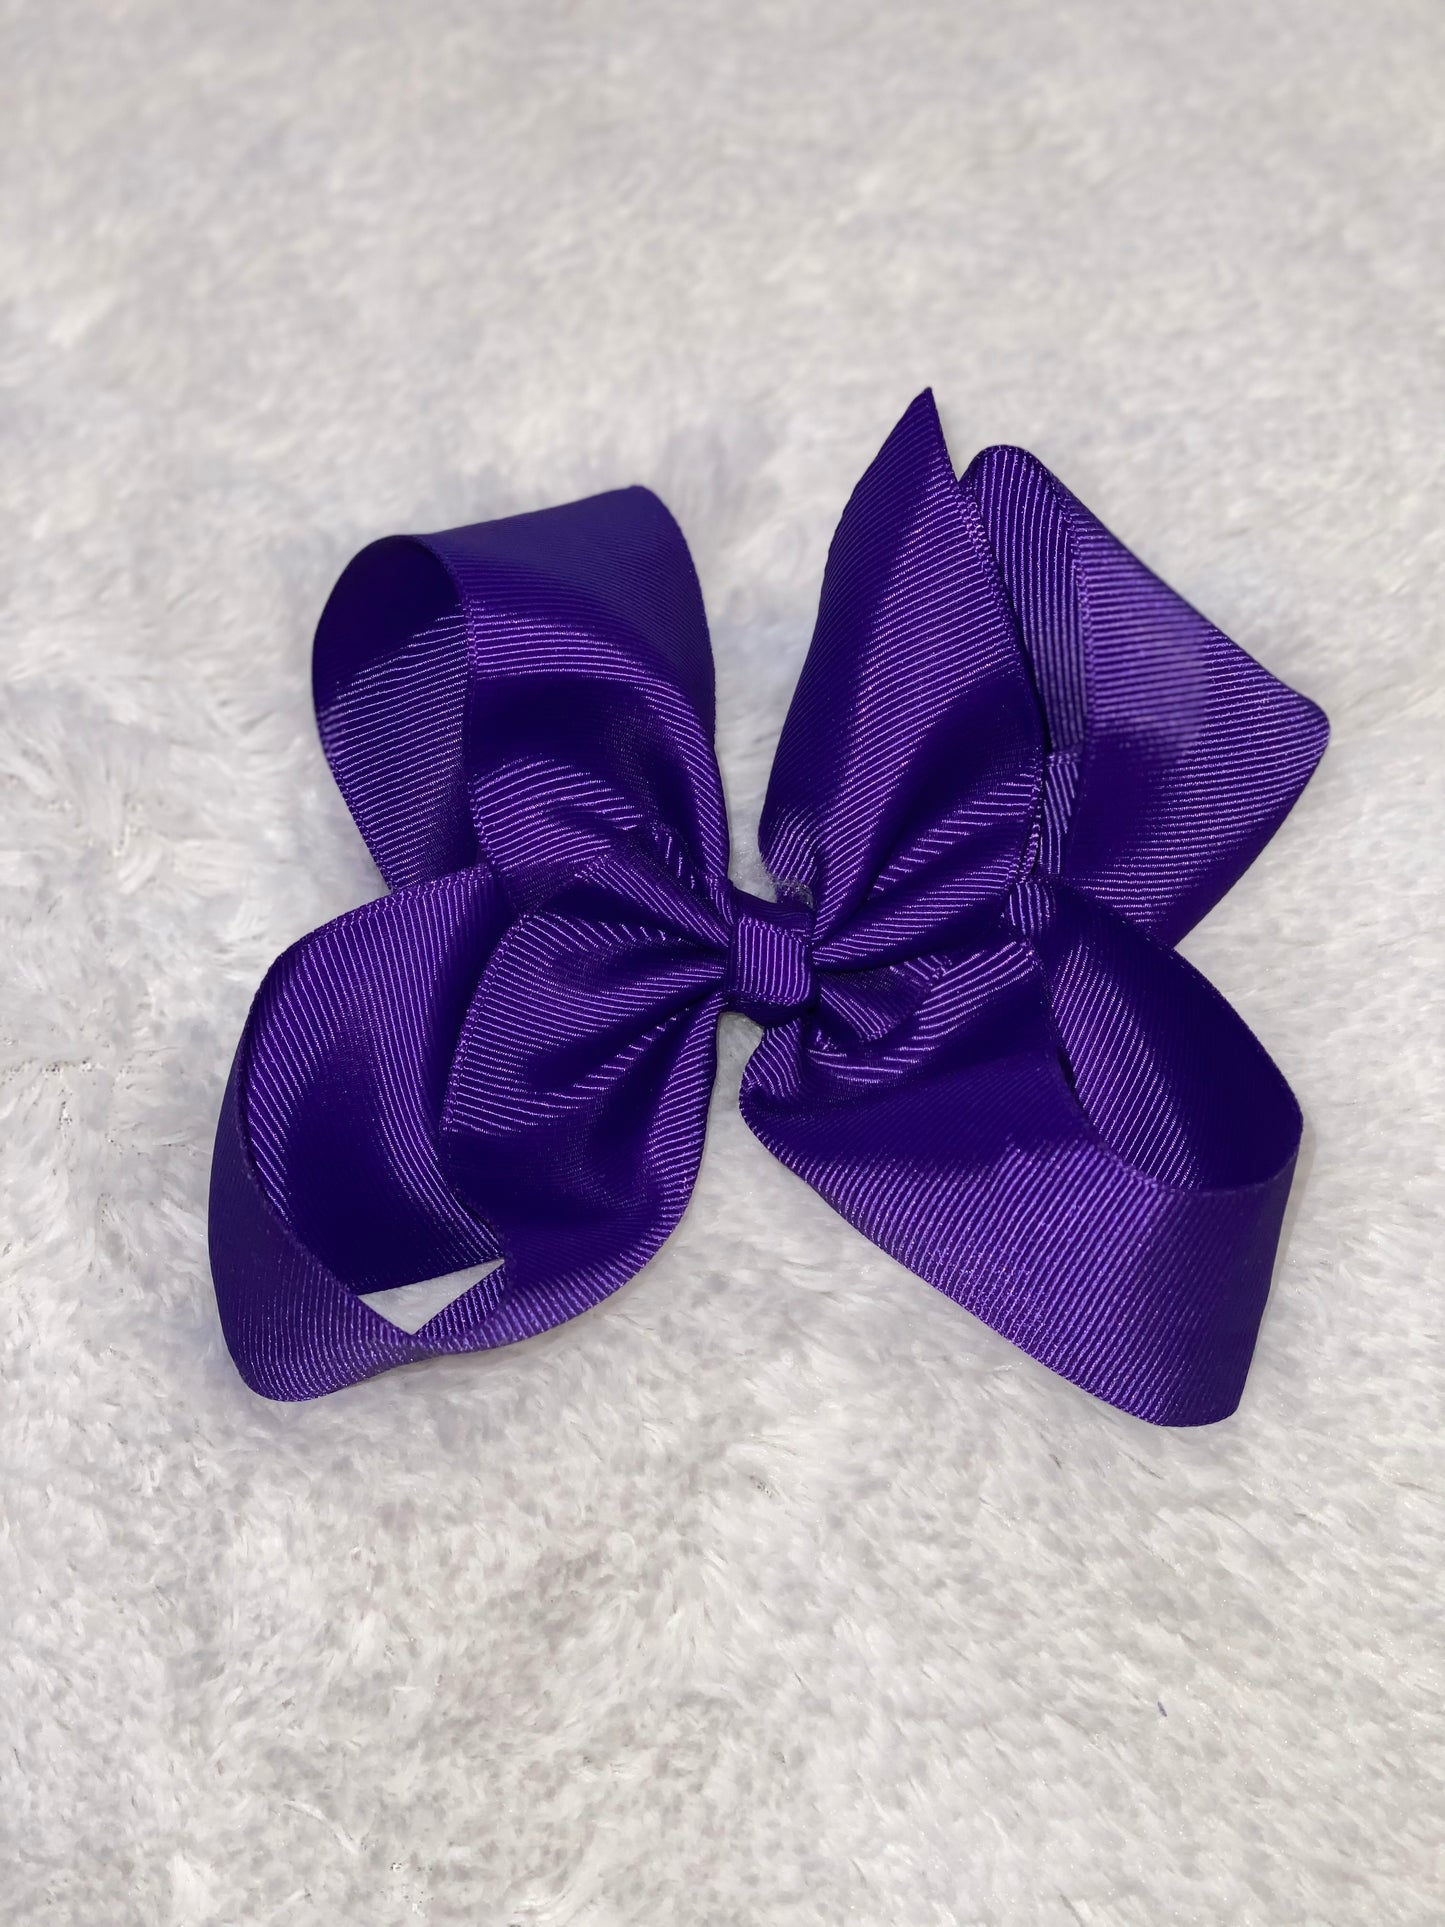 5 inch ribbon bows- alligator clips